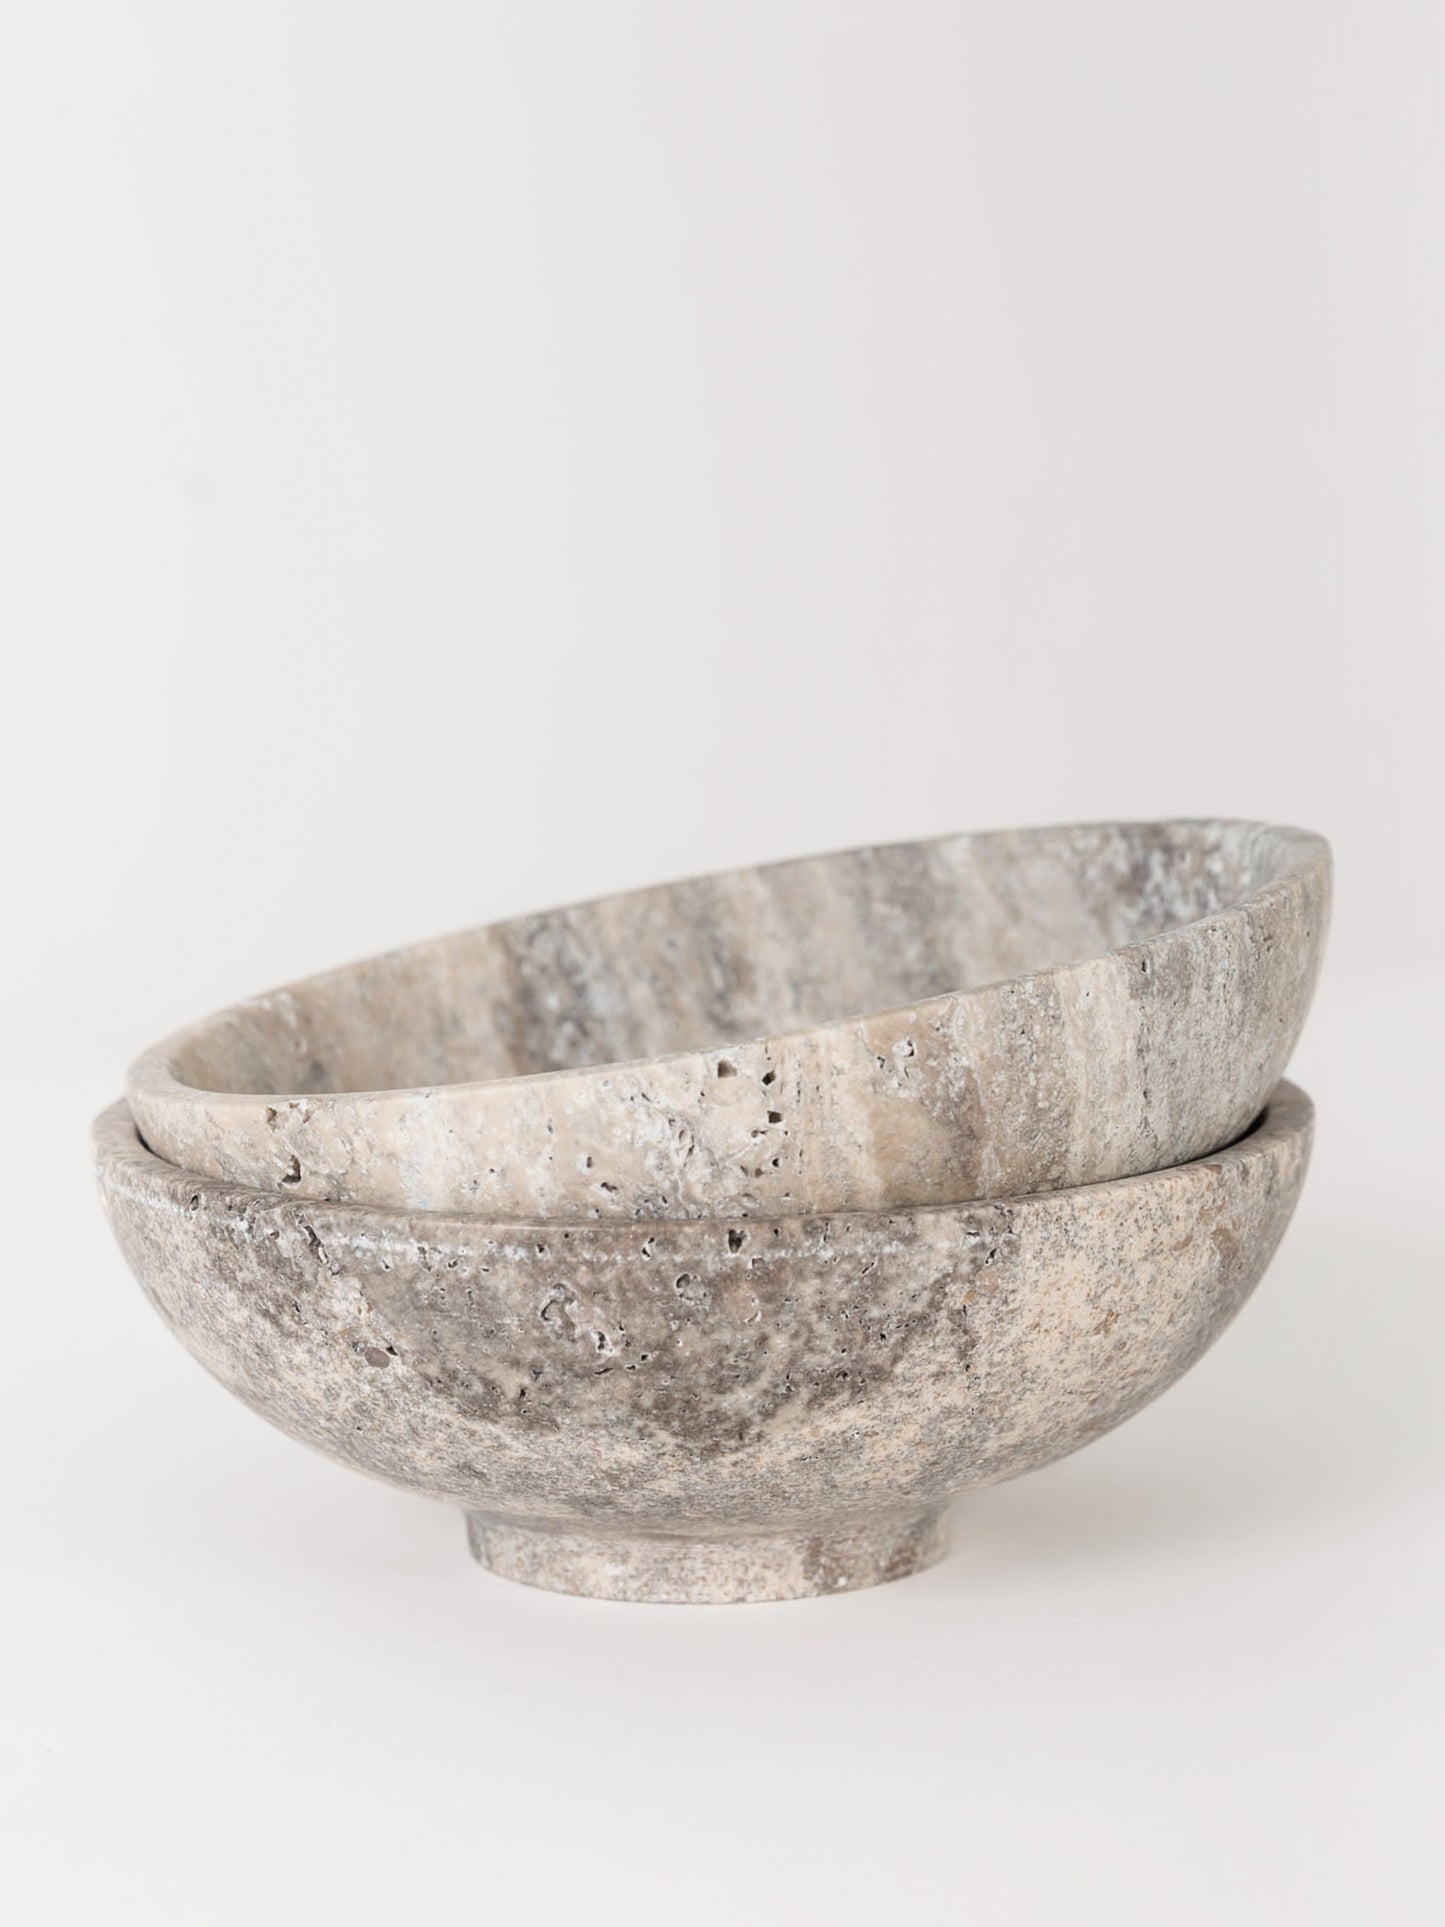 Medium Bowl, Gray Travertine Marble